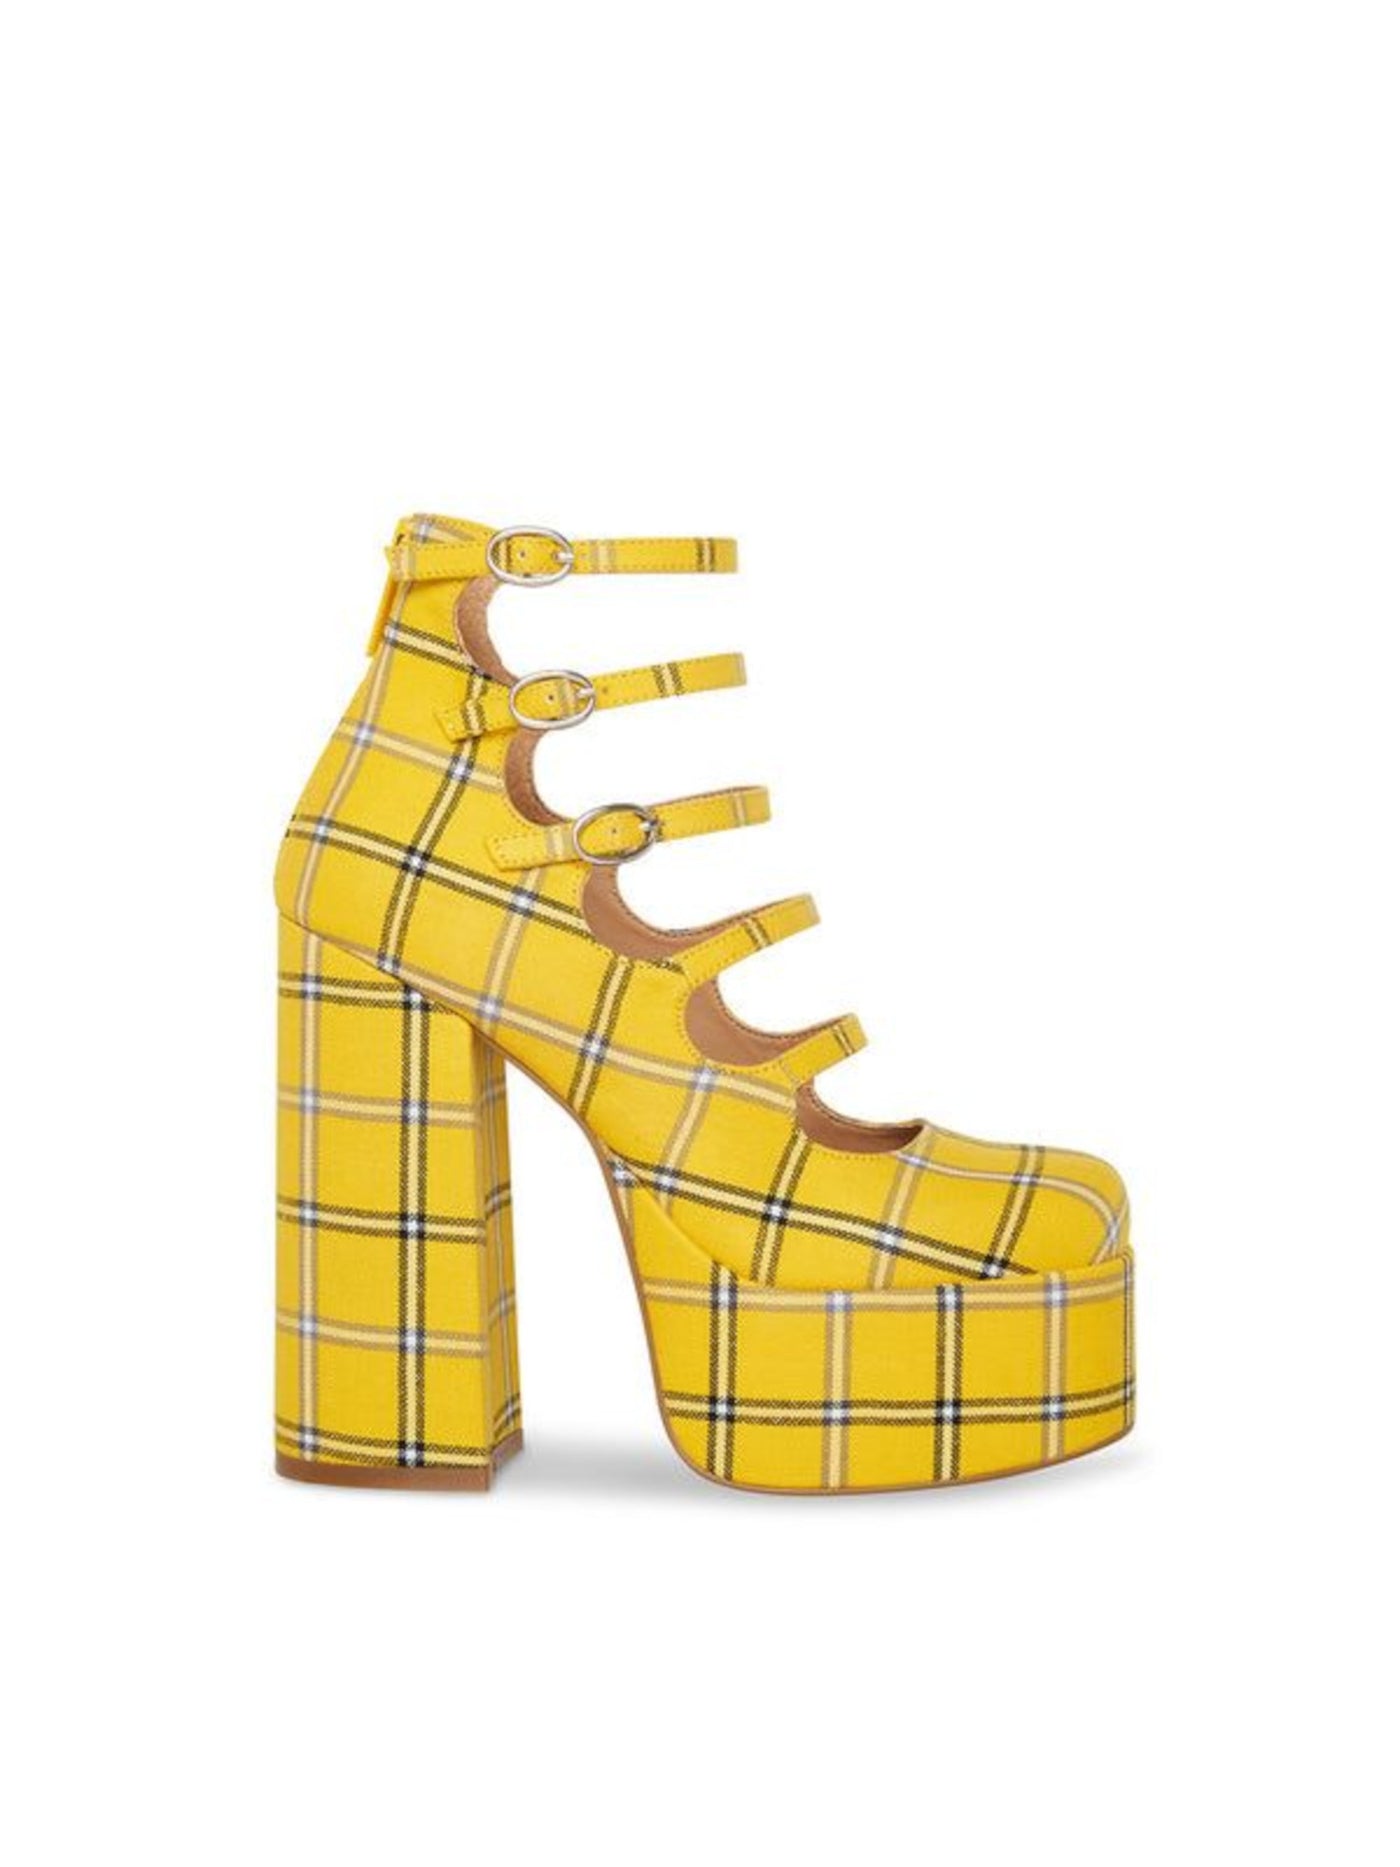 STEVE MADDEN Womens Yellow Plaid 3" Platform Adjustable Round Toe Block Heel Zip-Up Dress Pumps Shoes 6.5 M